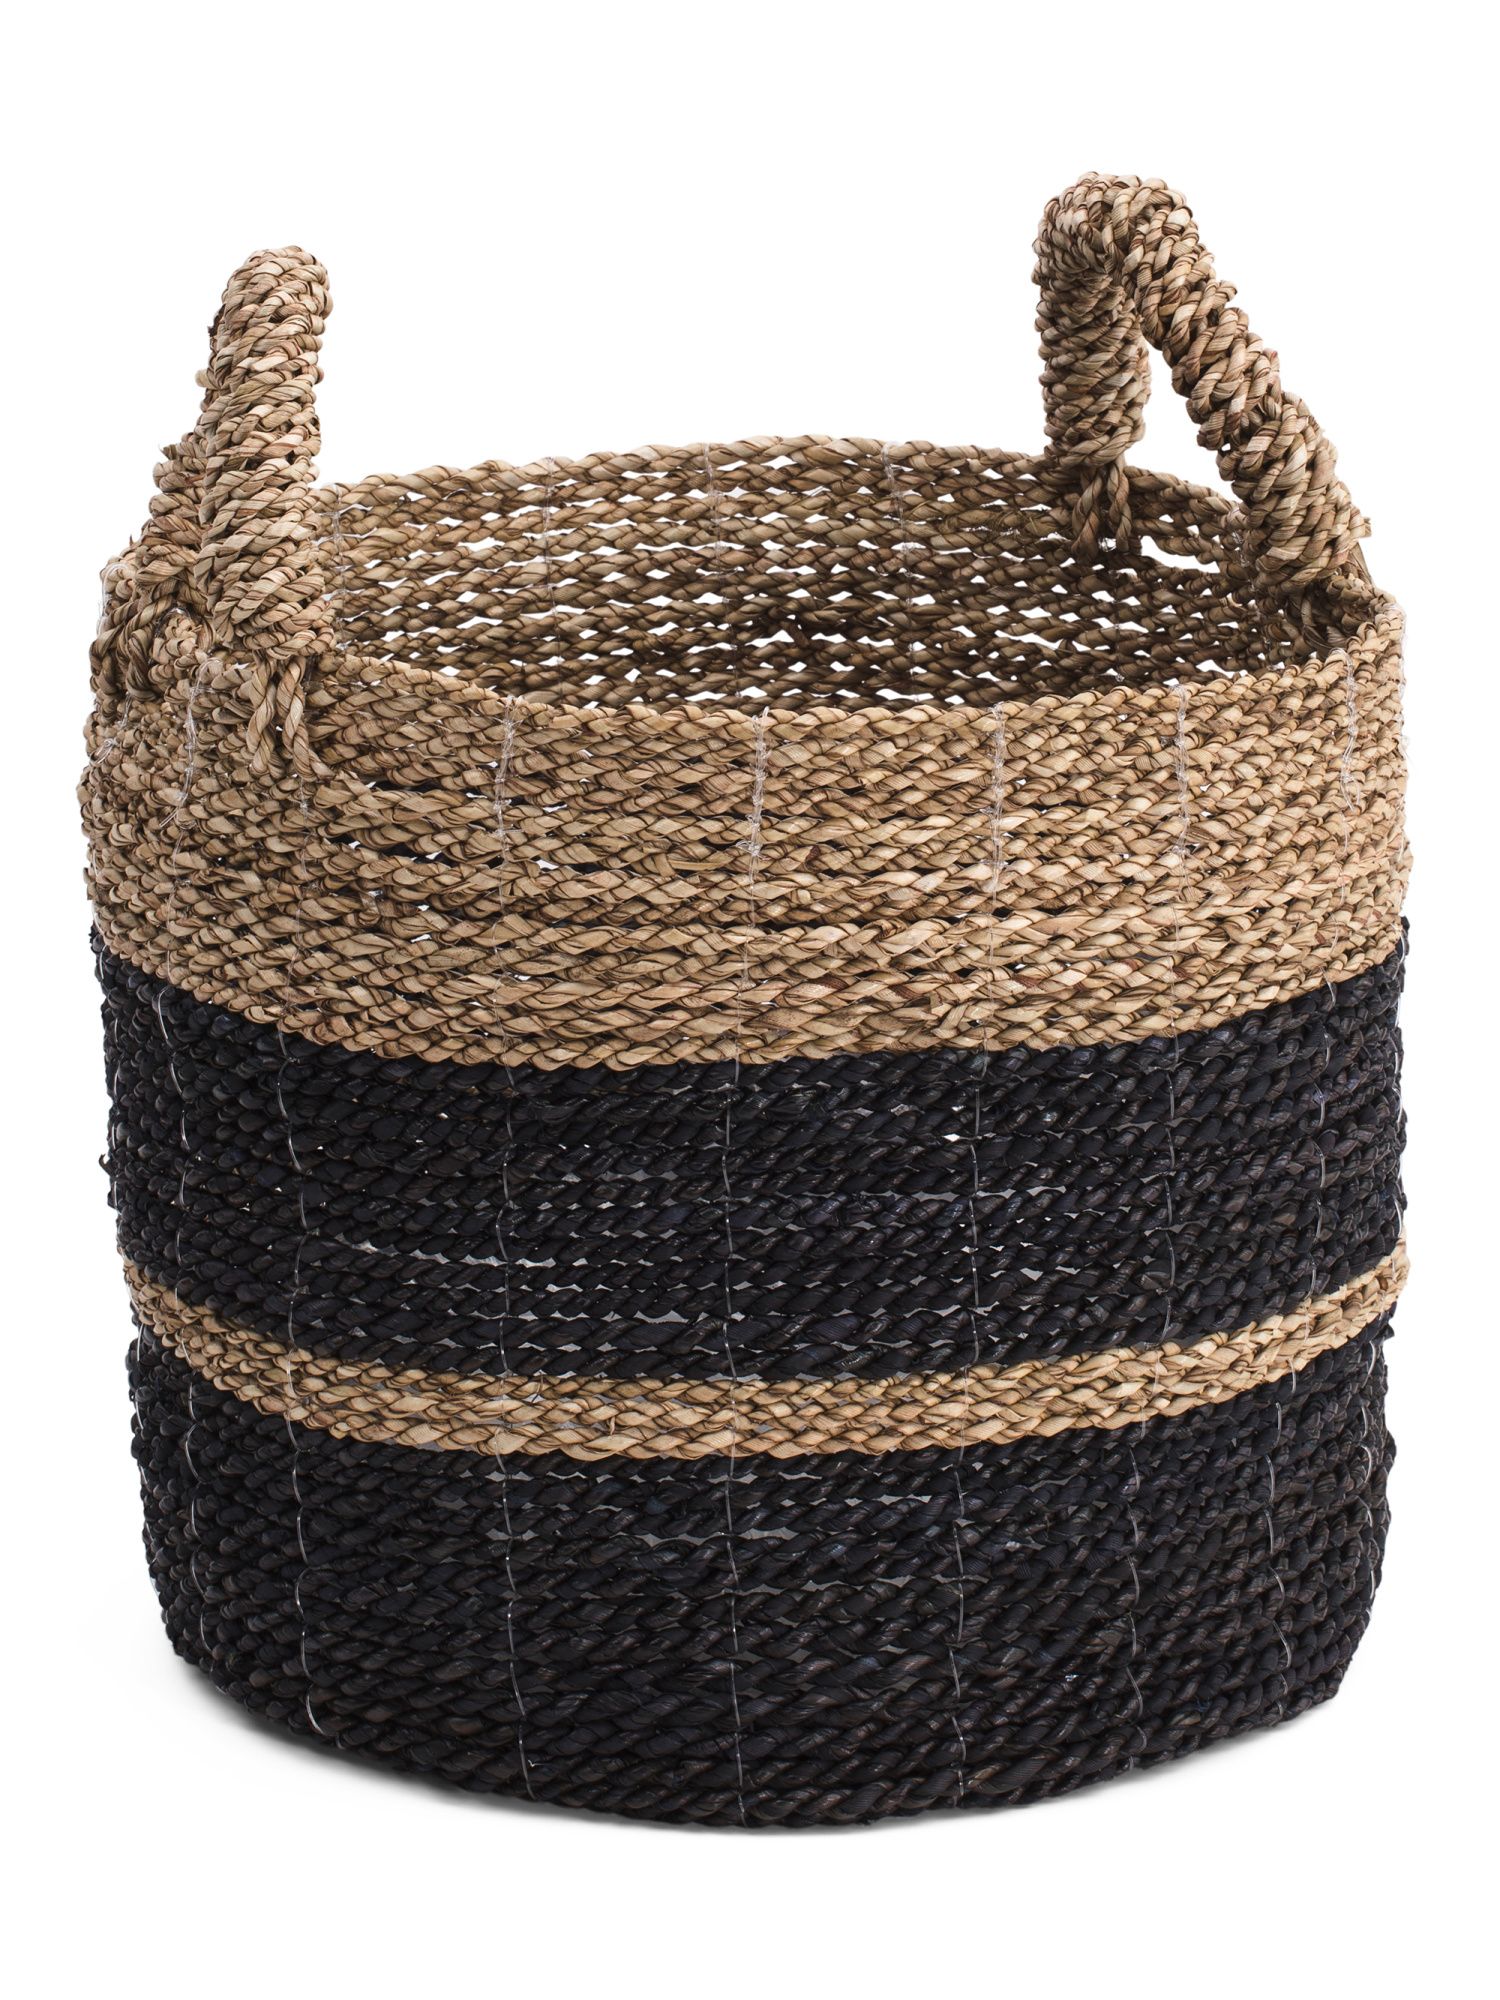 Medium Round Seagrass Basket | TJ Maxx